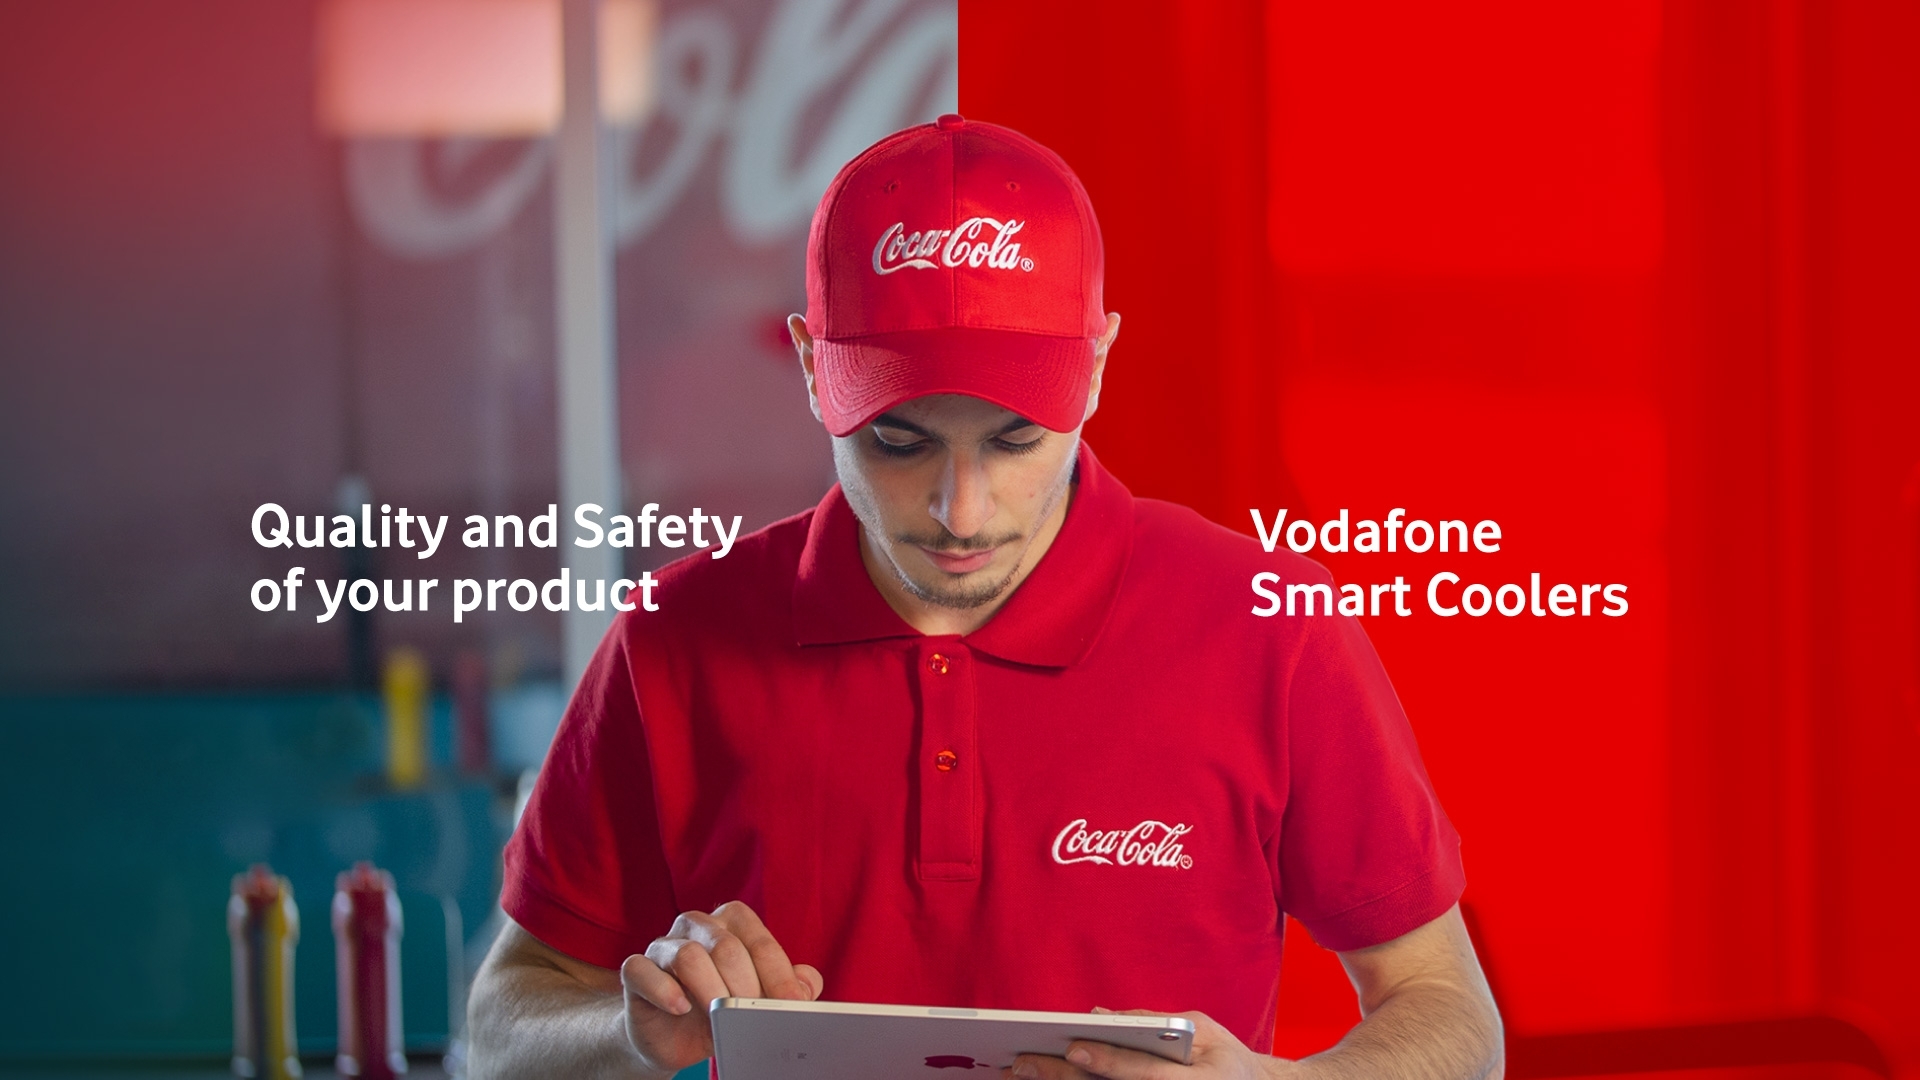 Vodafone Smart Coolers